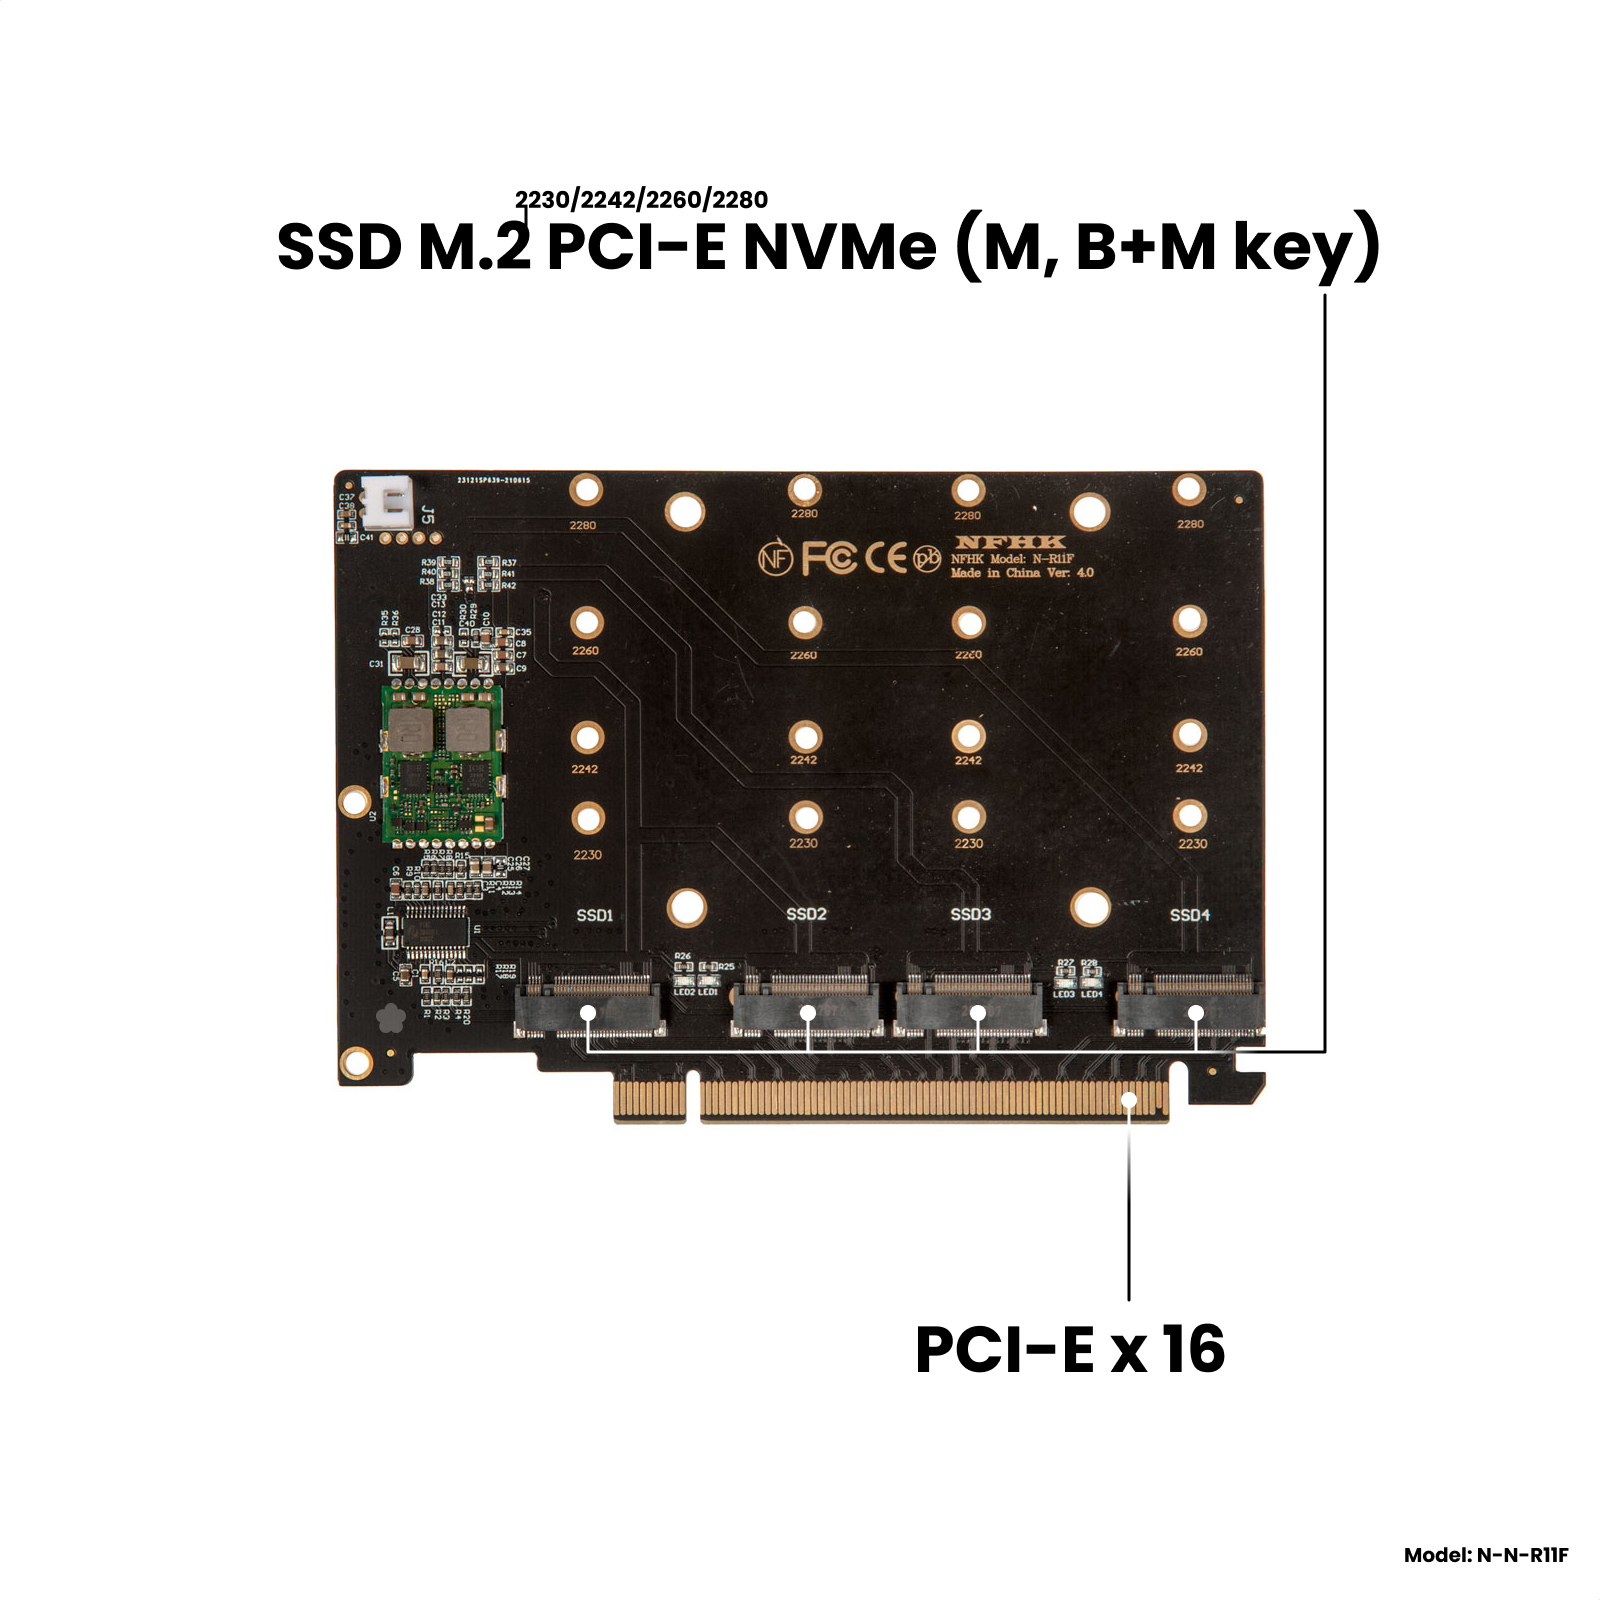 Адаптер-переходник (плата расширения) с активным охлаждением для установки 4 накопителей SSD M.2 2230-2280 PCI-E NVMe (M B+M key) в слот PCI-E x16